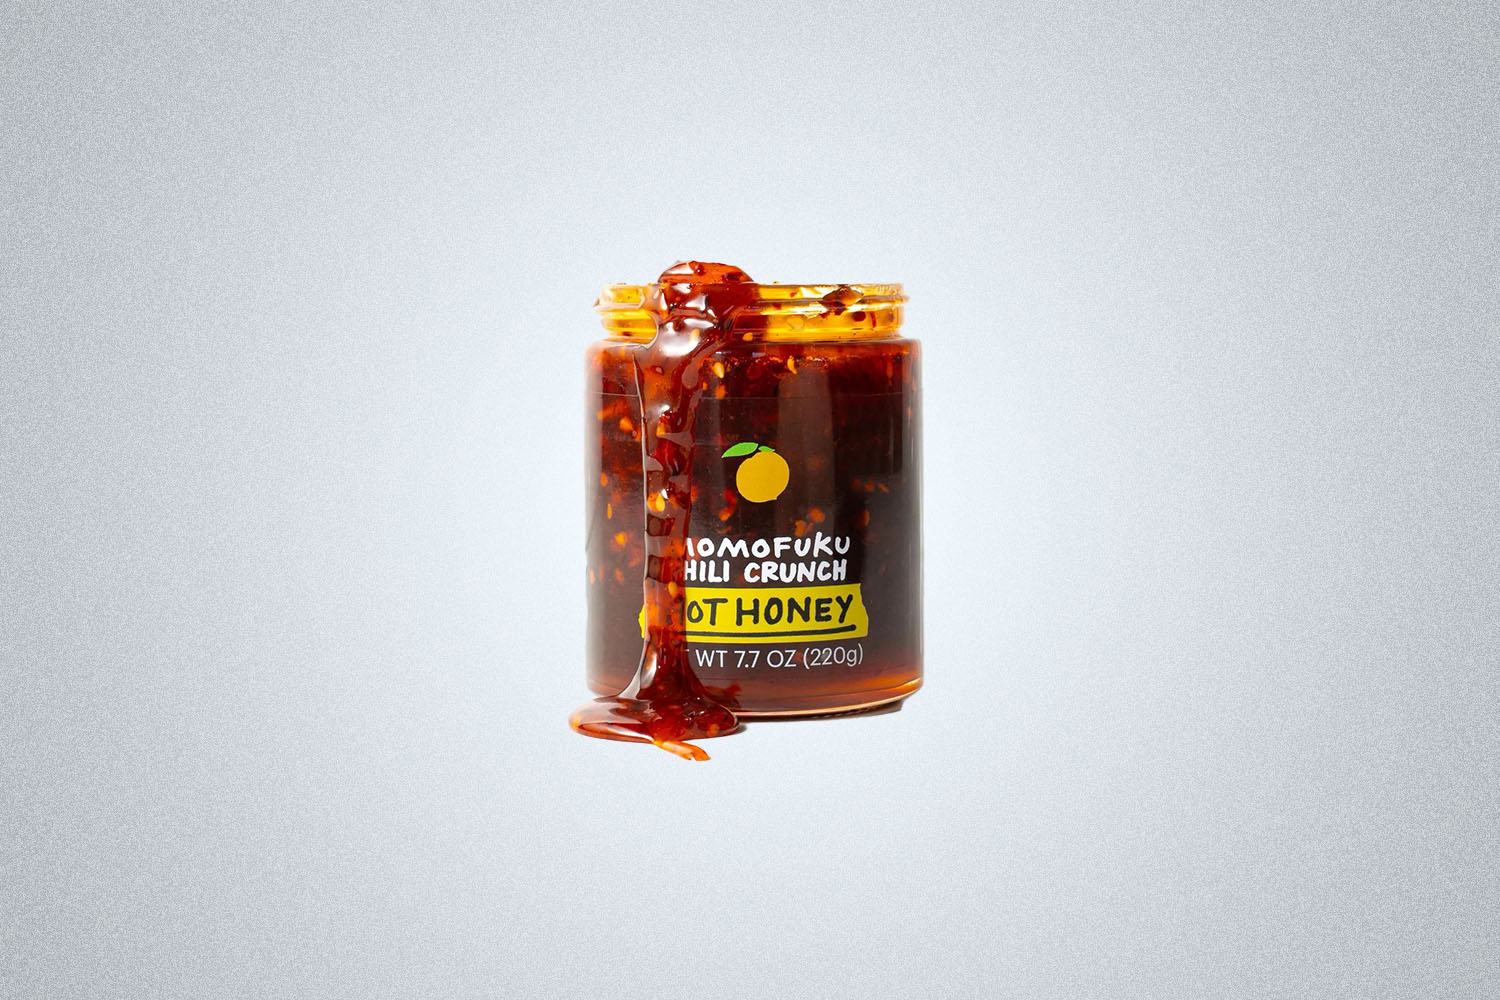 The Momofuku Chili Crunch Hot Honey on a gray background